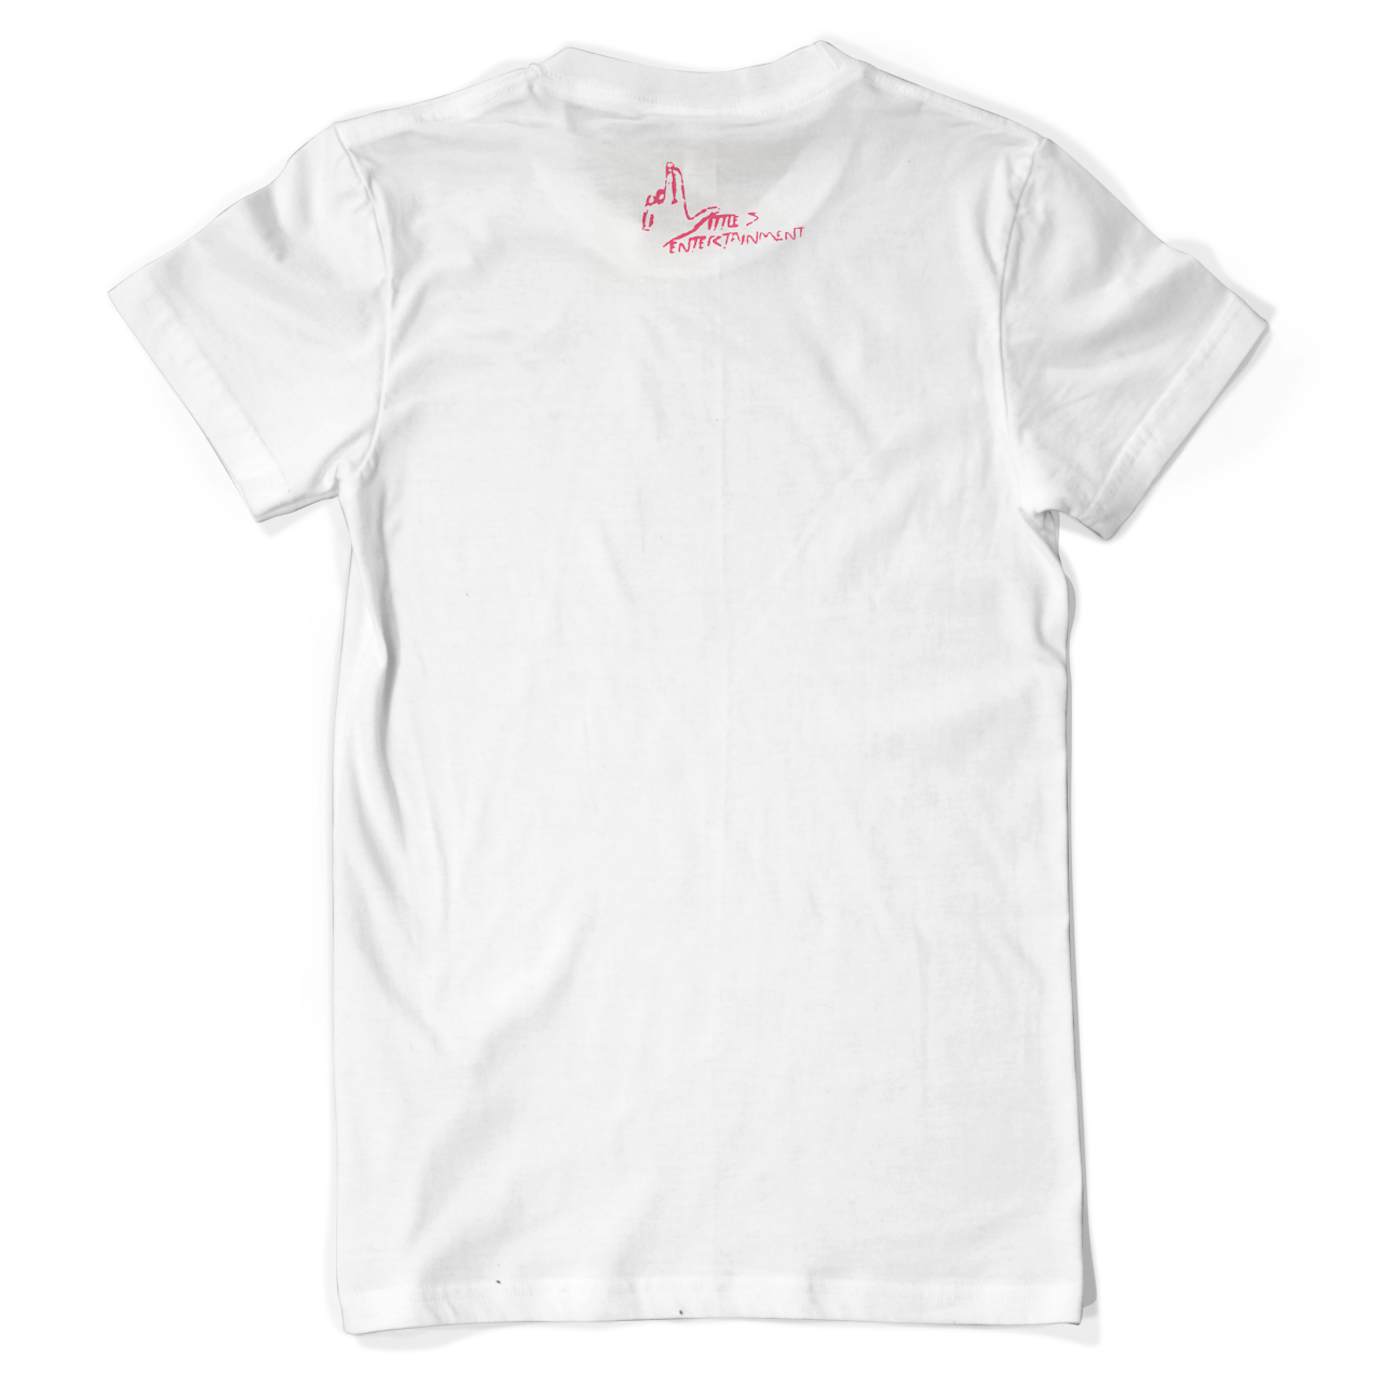 Tay Way - White / Pink T-Shirt